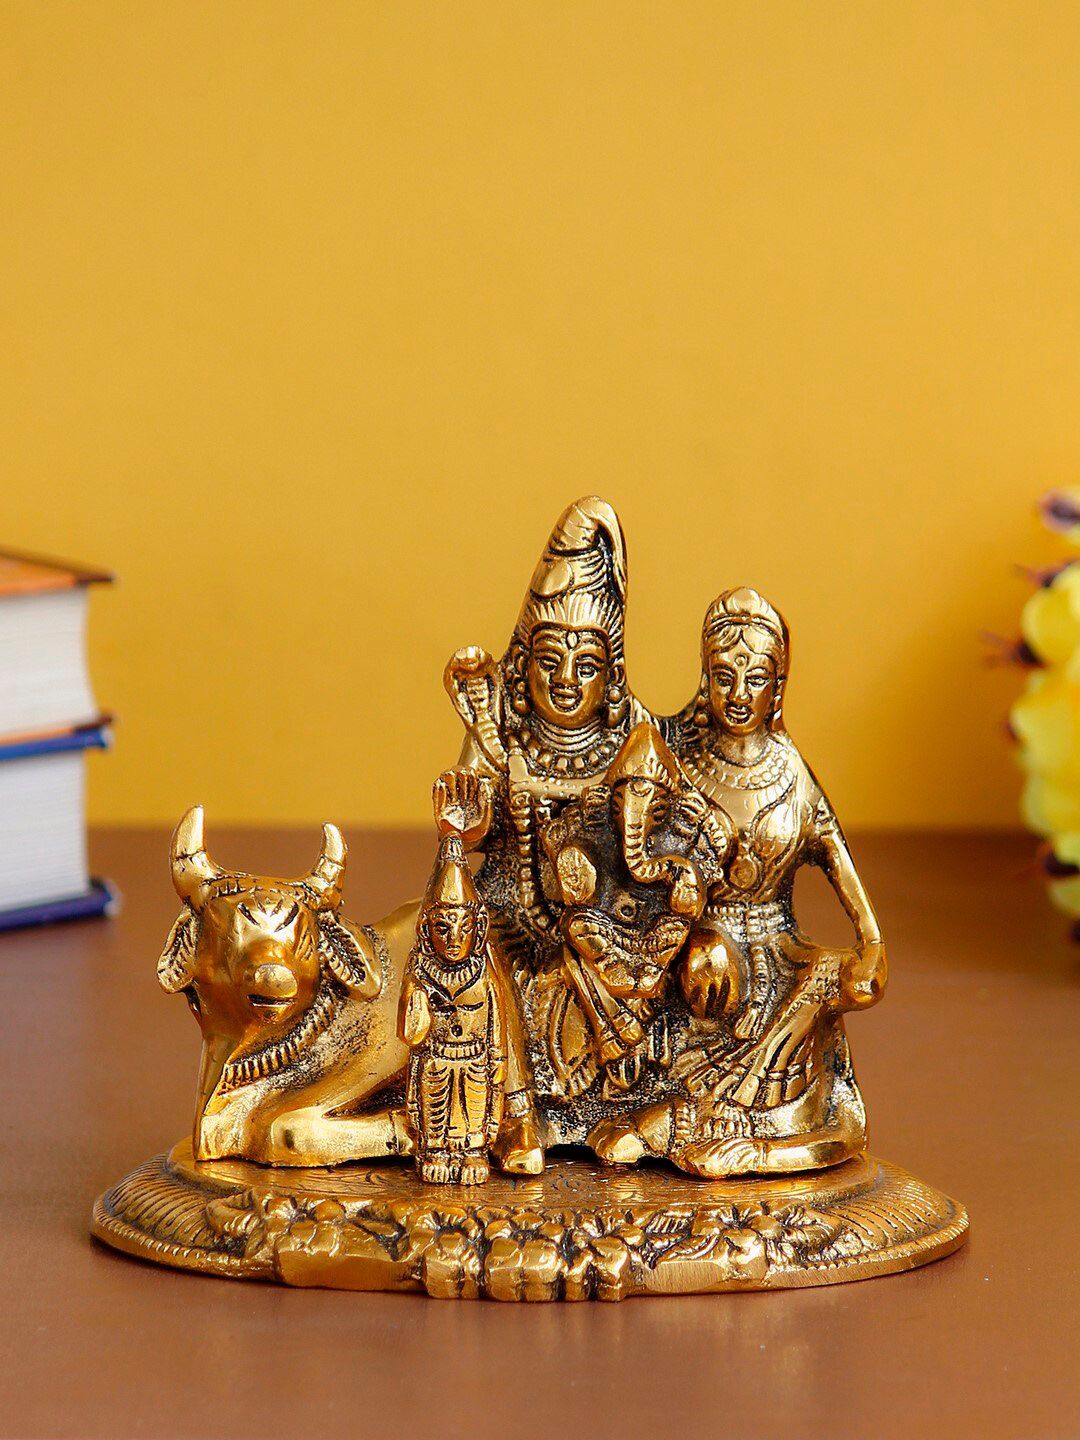 eCraftIndia Oxidized Gold-Toned Shiva Parvati Idol With Nandi Showpiece Price in India